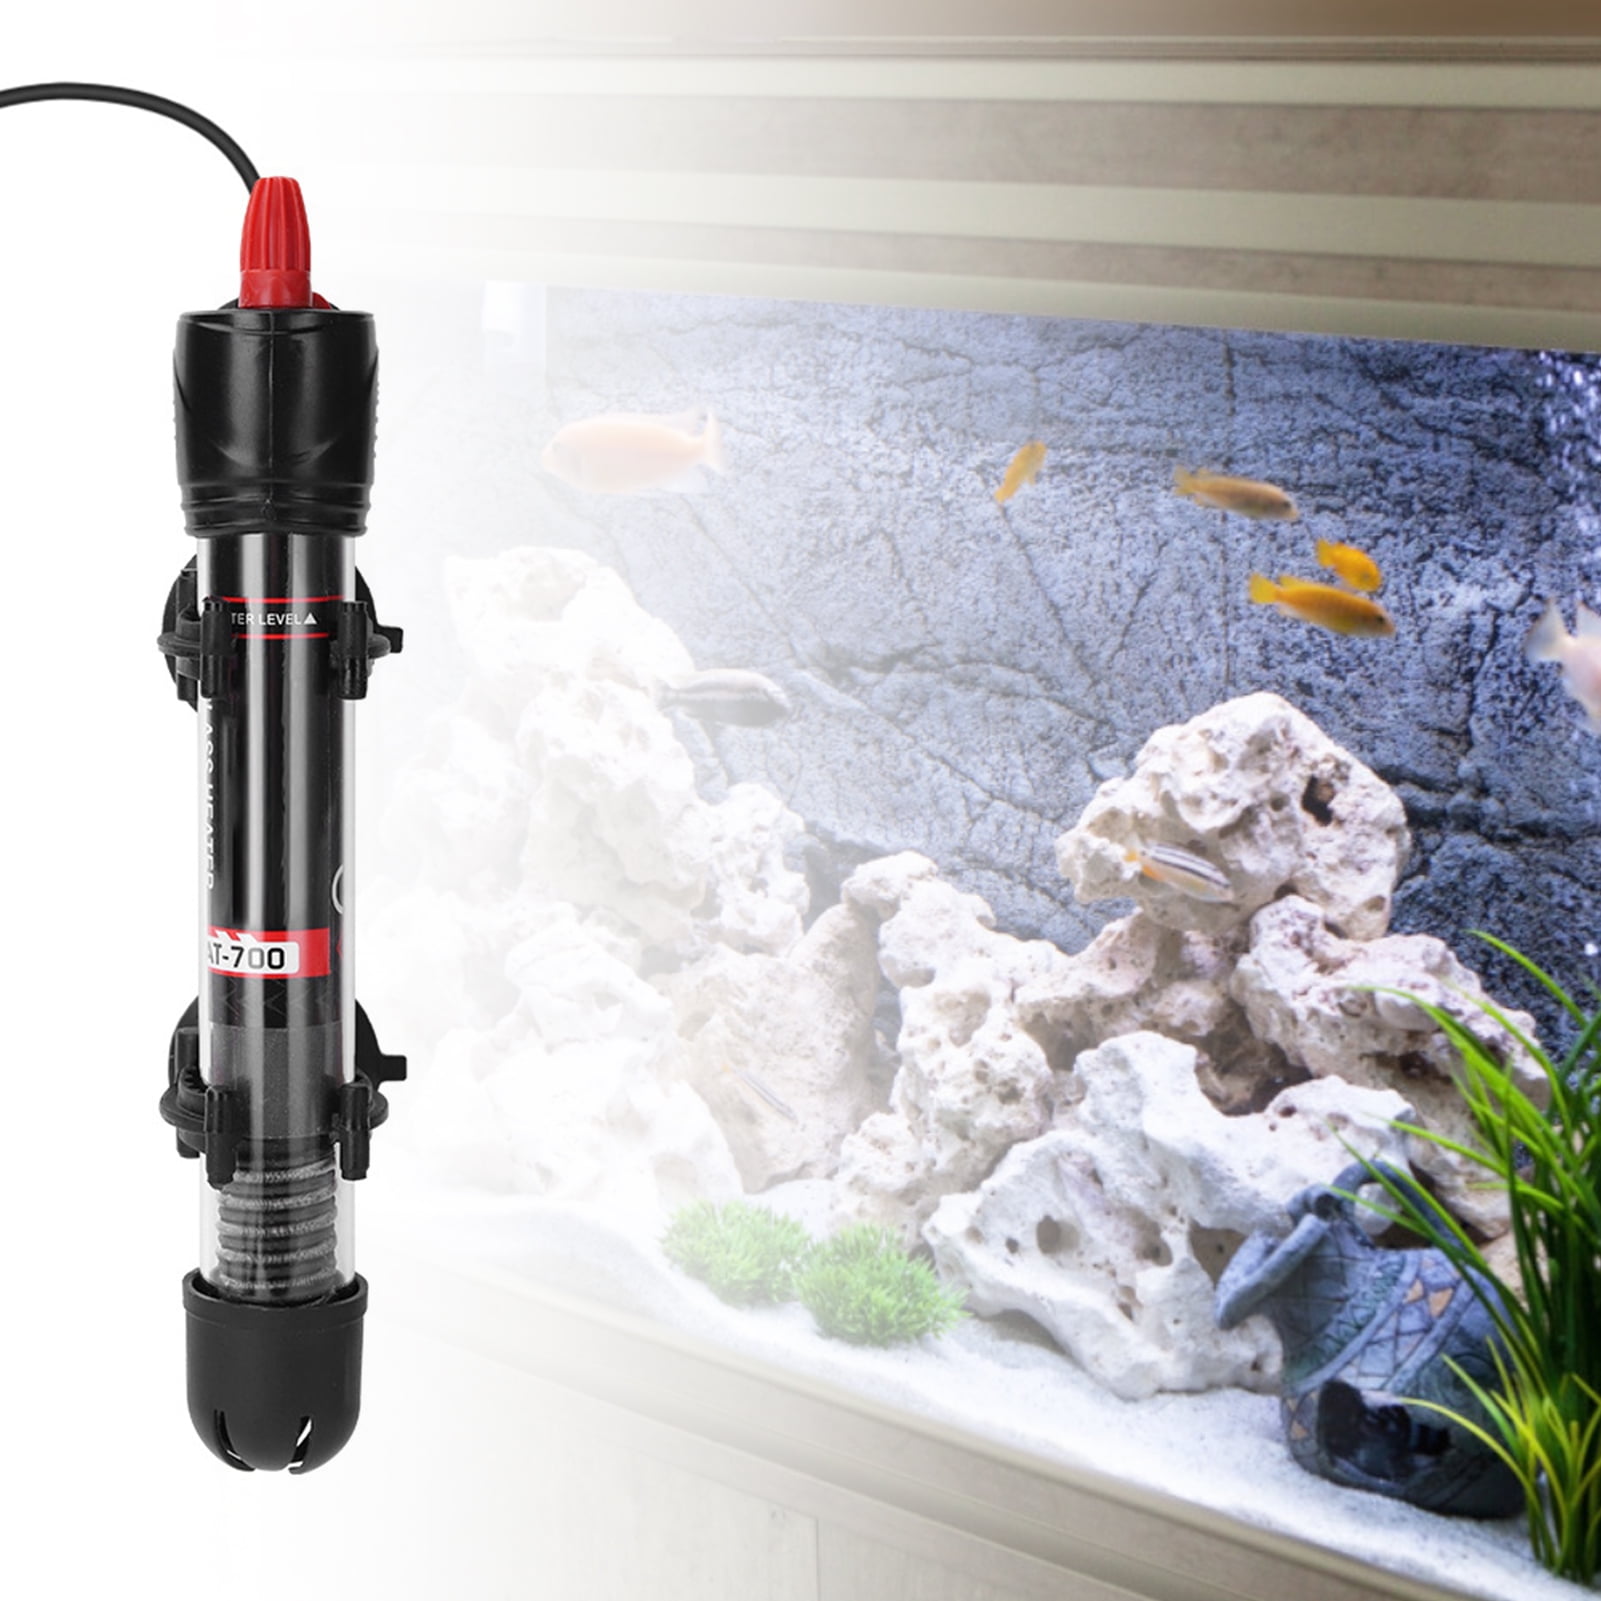 25W YUGE Aquarium Heater with LCD Thermometer Alarm Submersible Water Temperature Meter Temperature Controller Kit Set Fish Tank Heating 